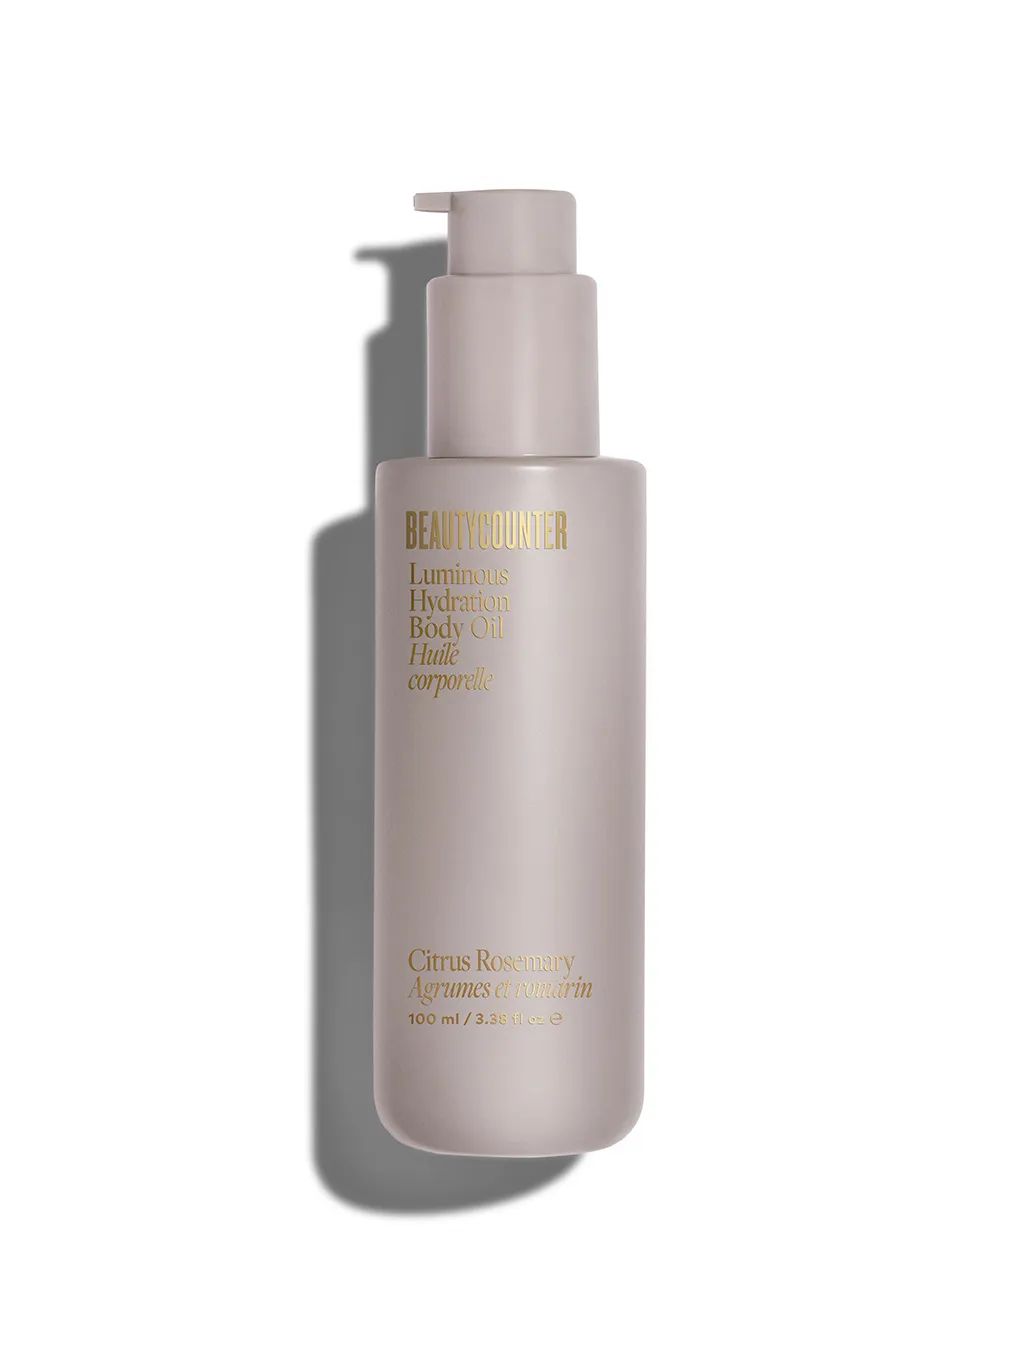 Luminous Hydration Body Oil in Citrus Rosemary - Beautycounter - Skin Care, Makeup, Bath and Body... | Beautycounter.com